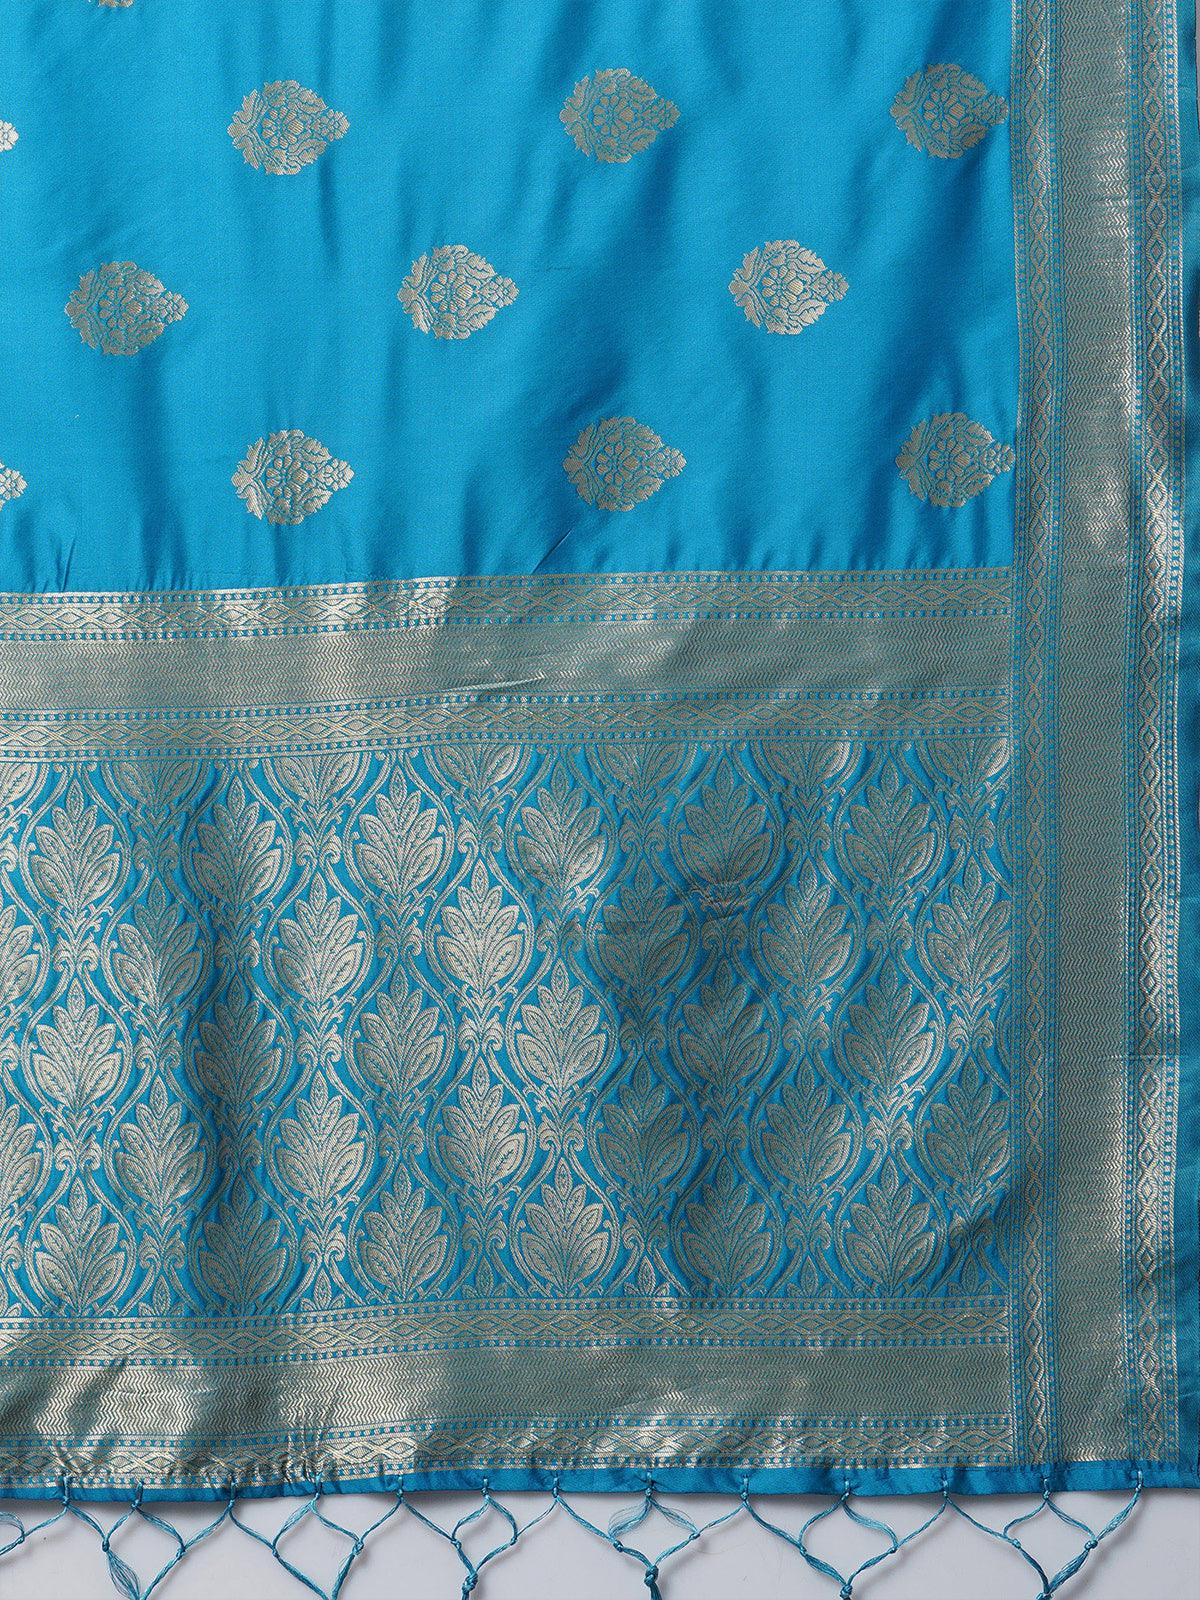 Blue Festive Silk Blend Woven Design Saree With Unstitched Blouse - Odette